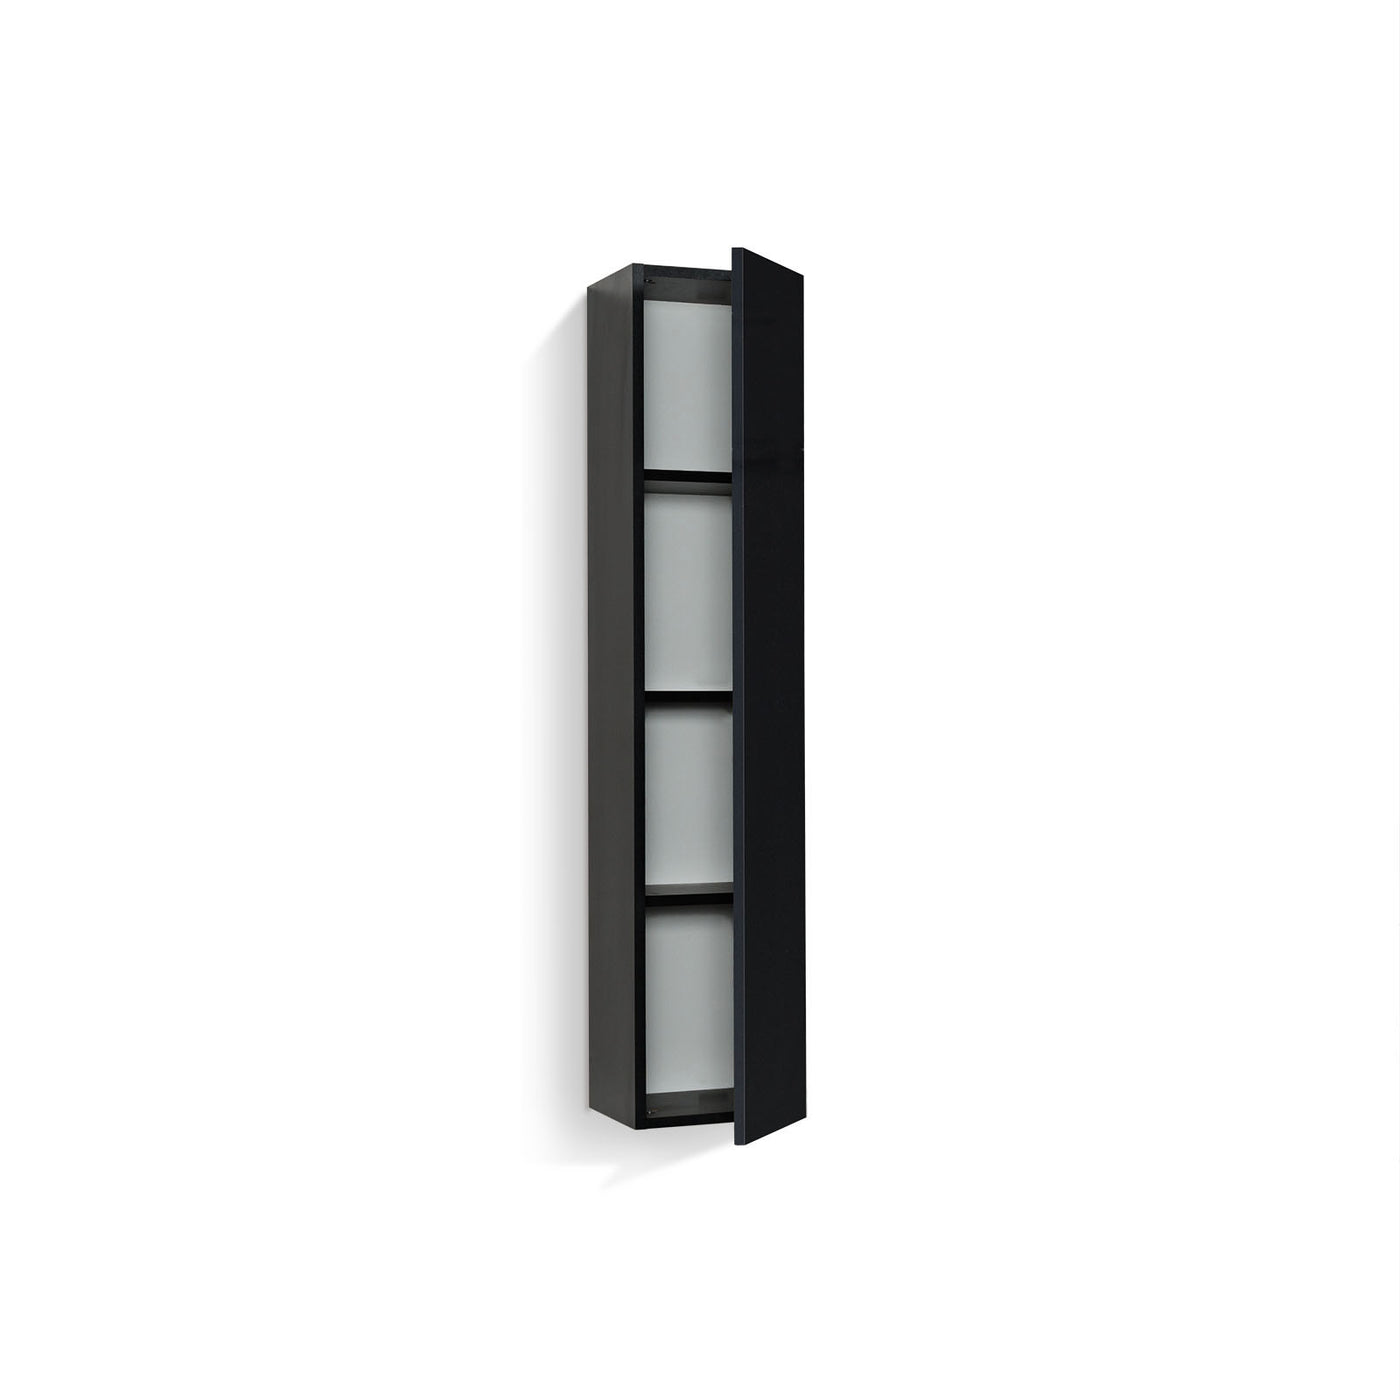 SPOT black hanging column